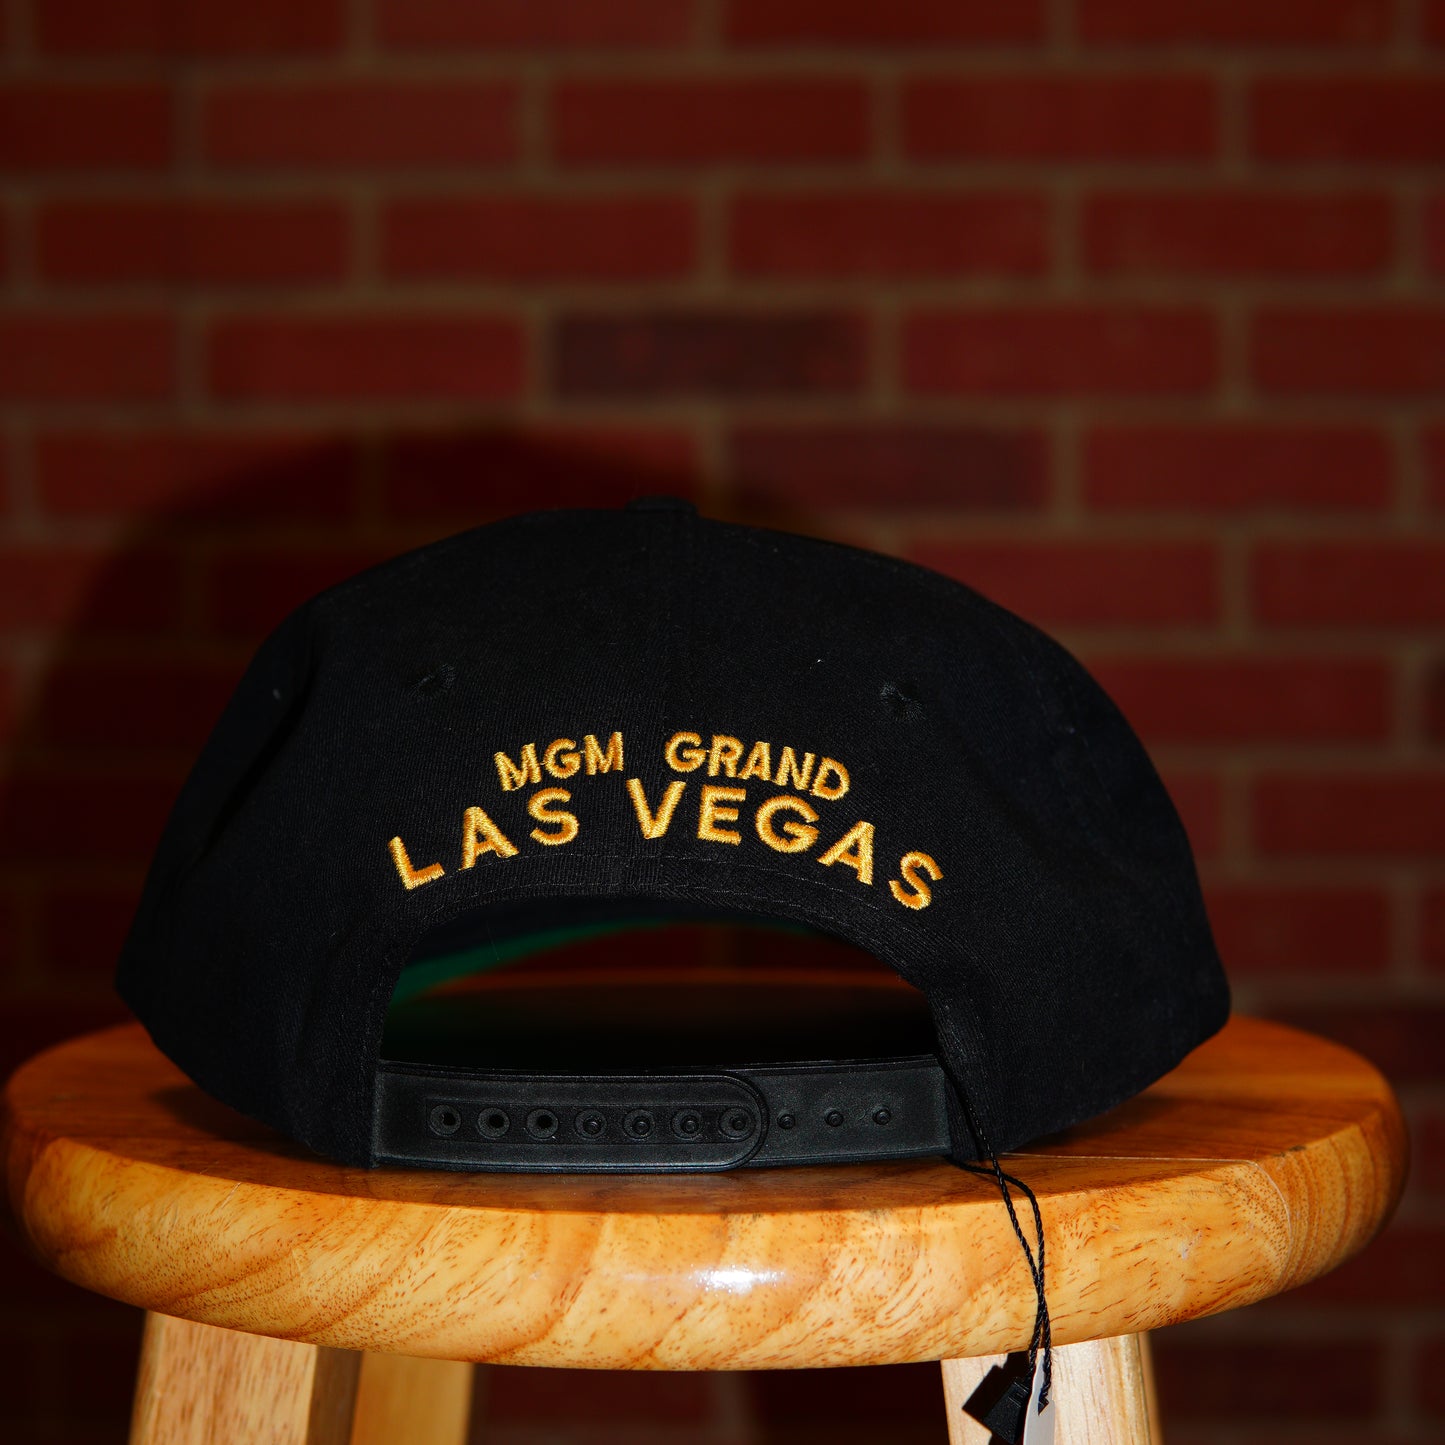 VTG MGM Grand Las Vegas Snapback Hat